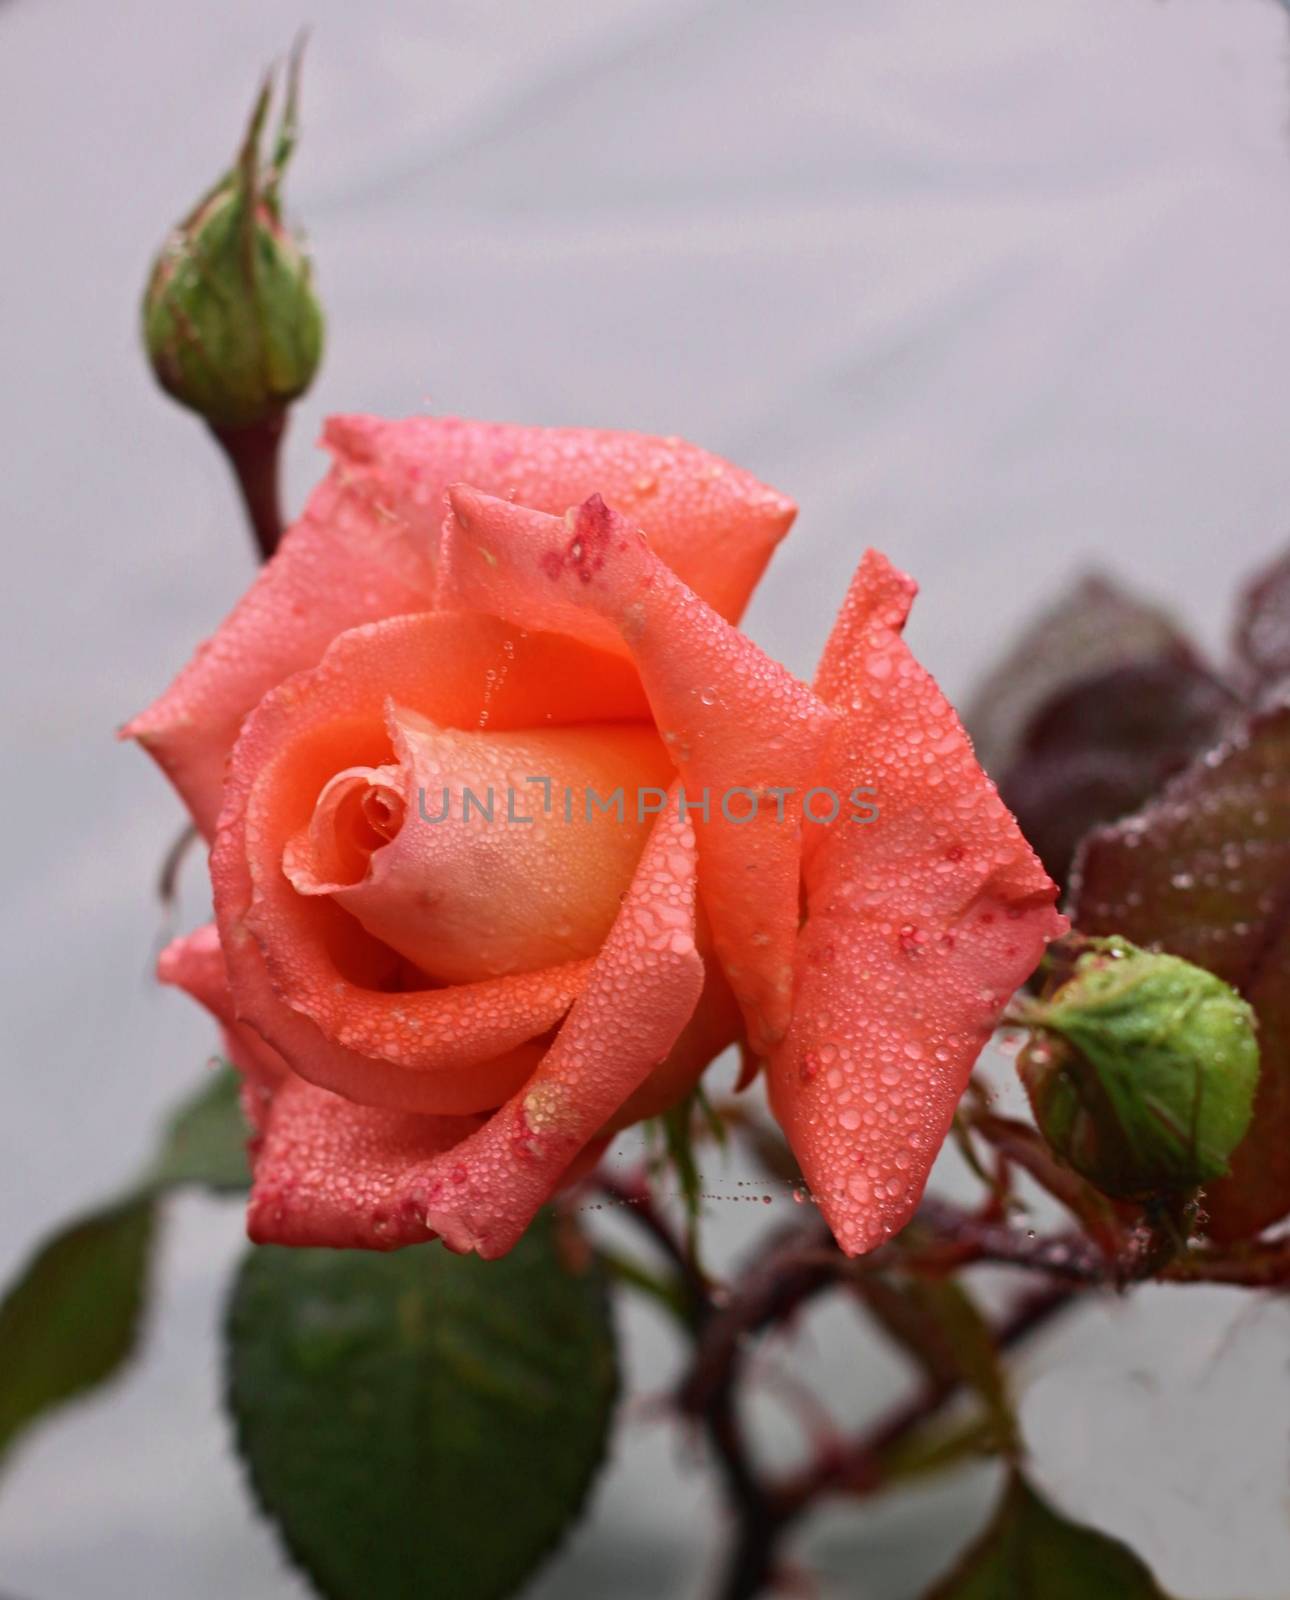 Wet rose by jnerad